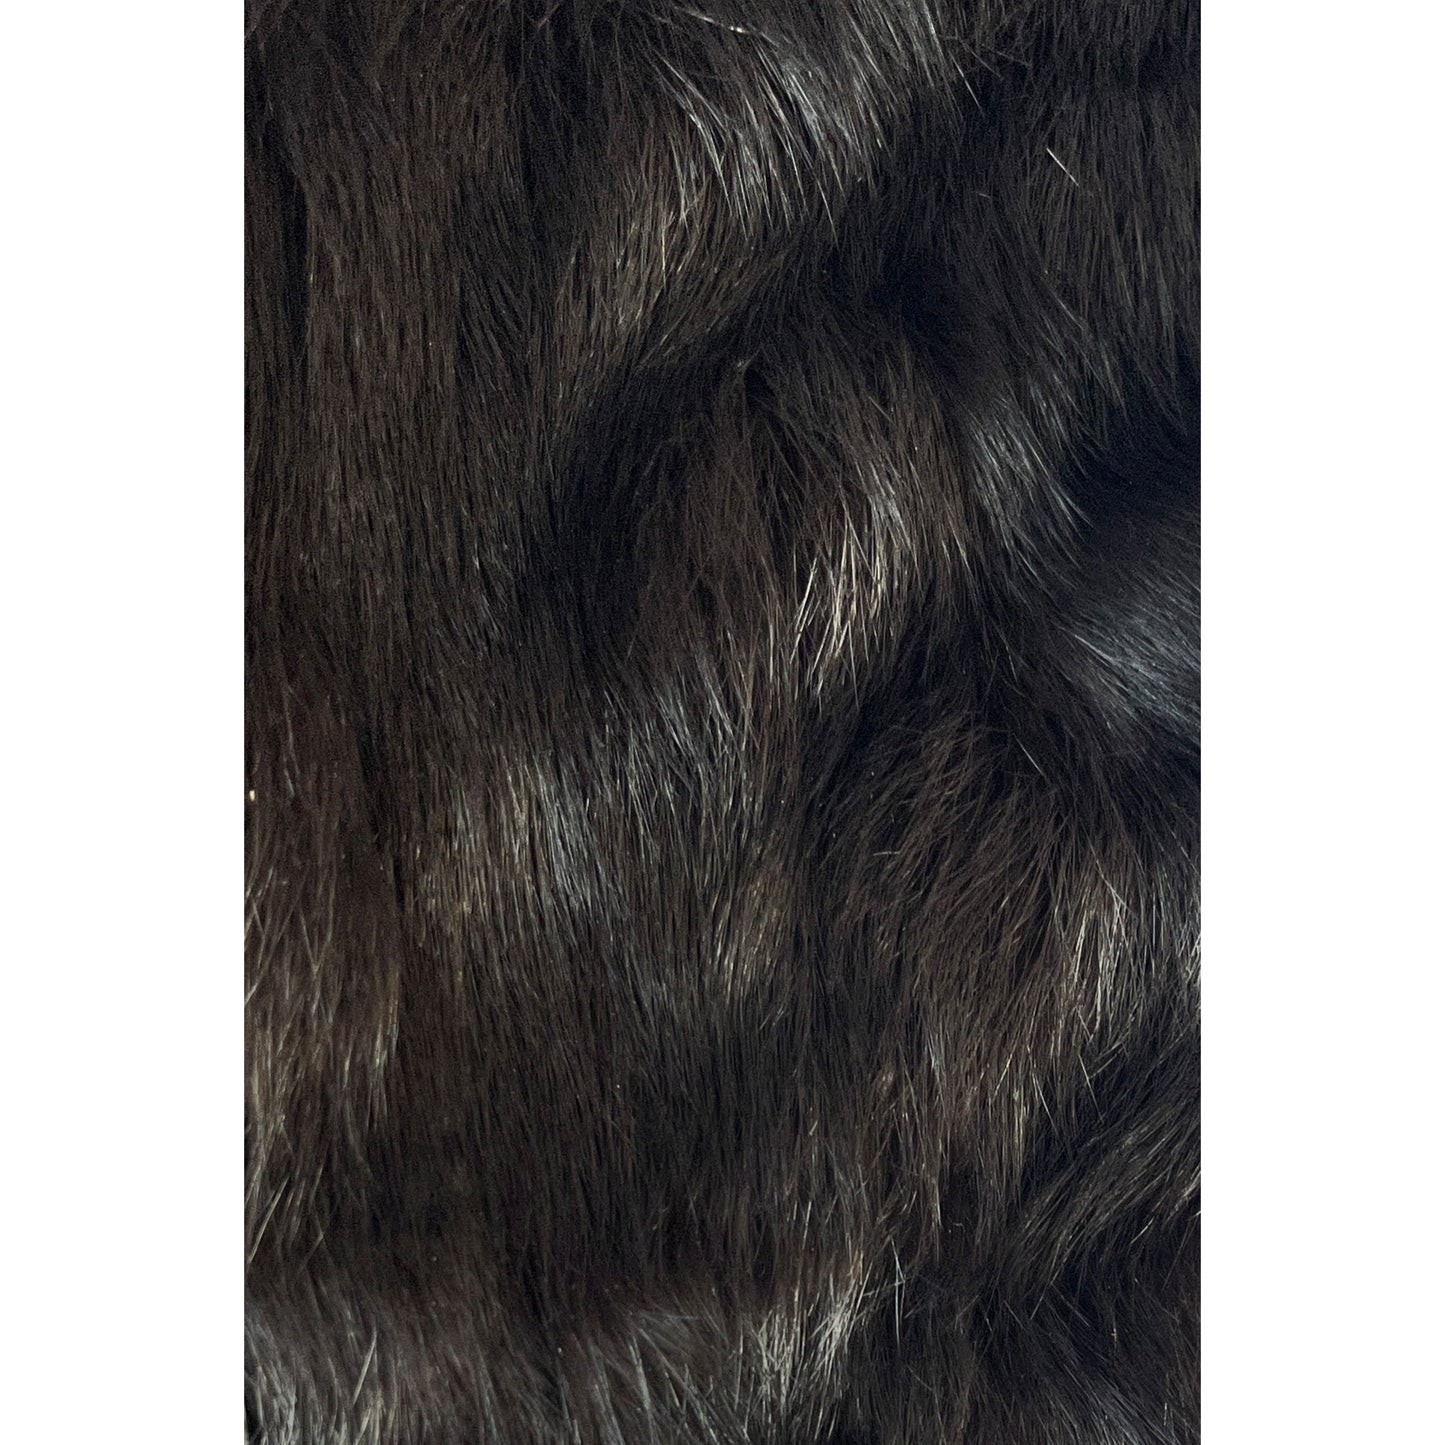 Fur Coat Rabbit Dark Brown Size M SKU 000381-1